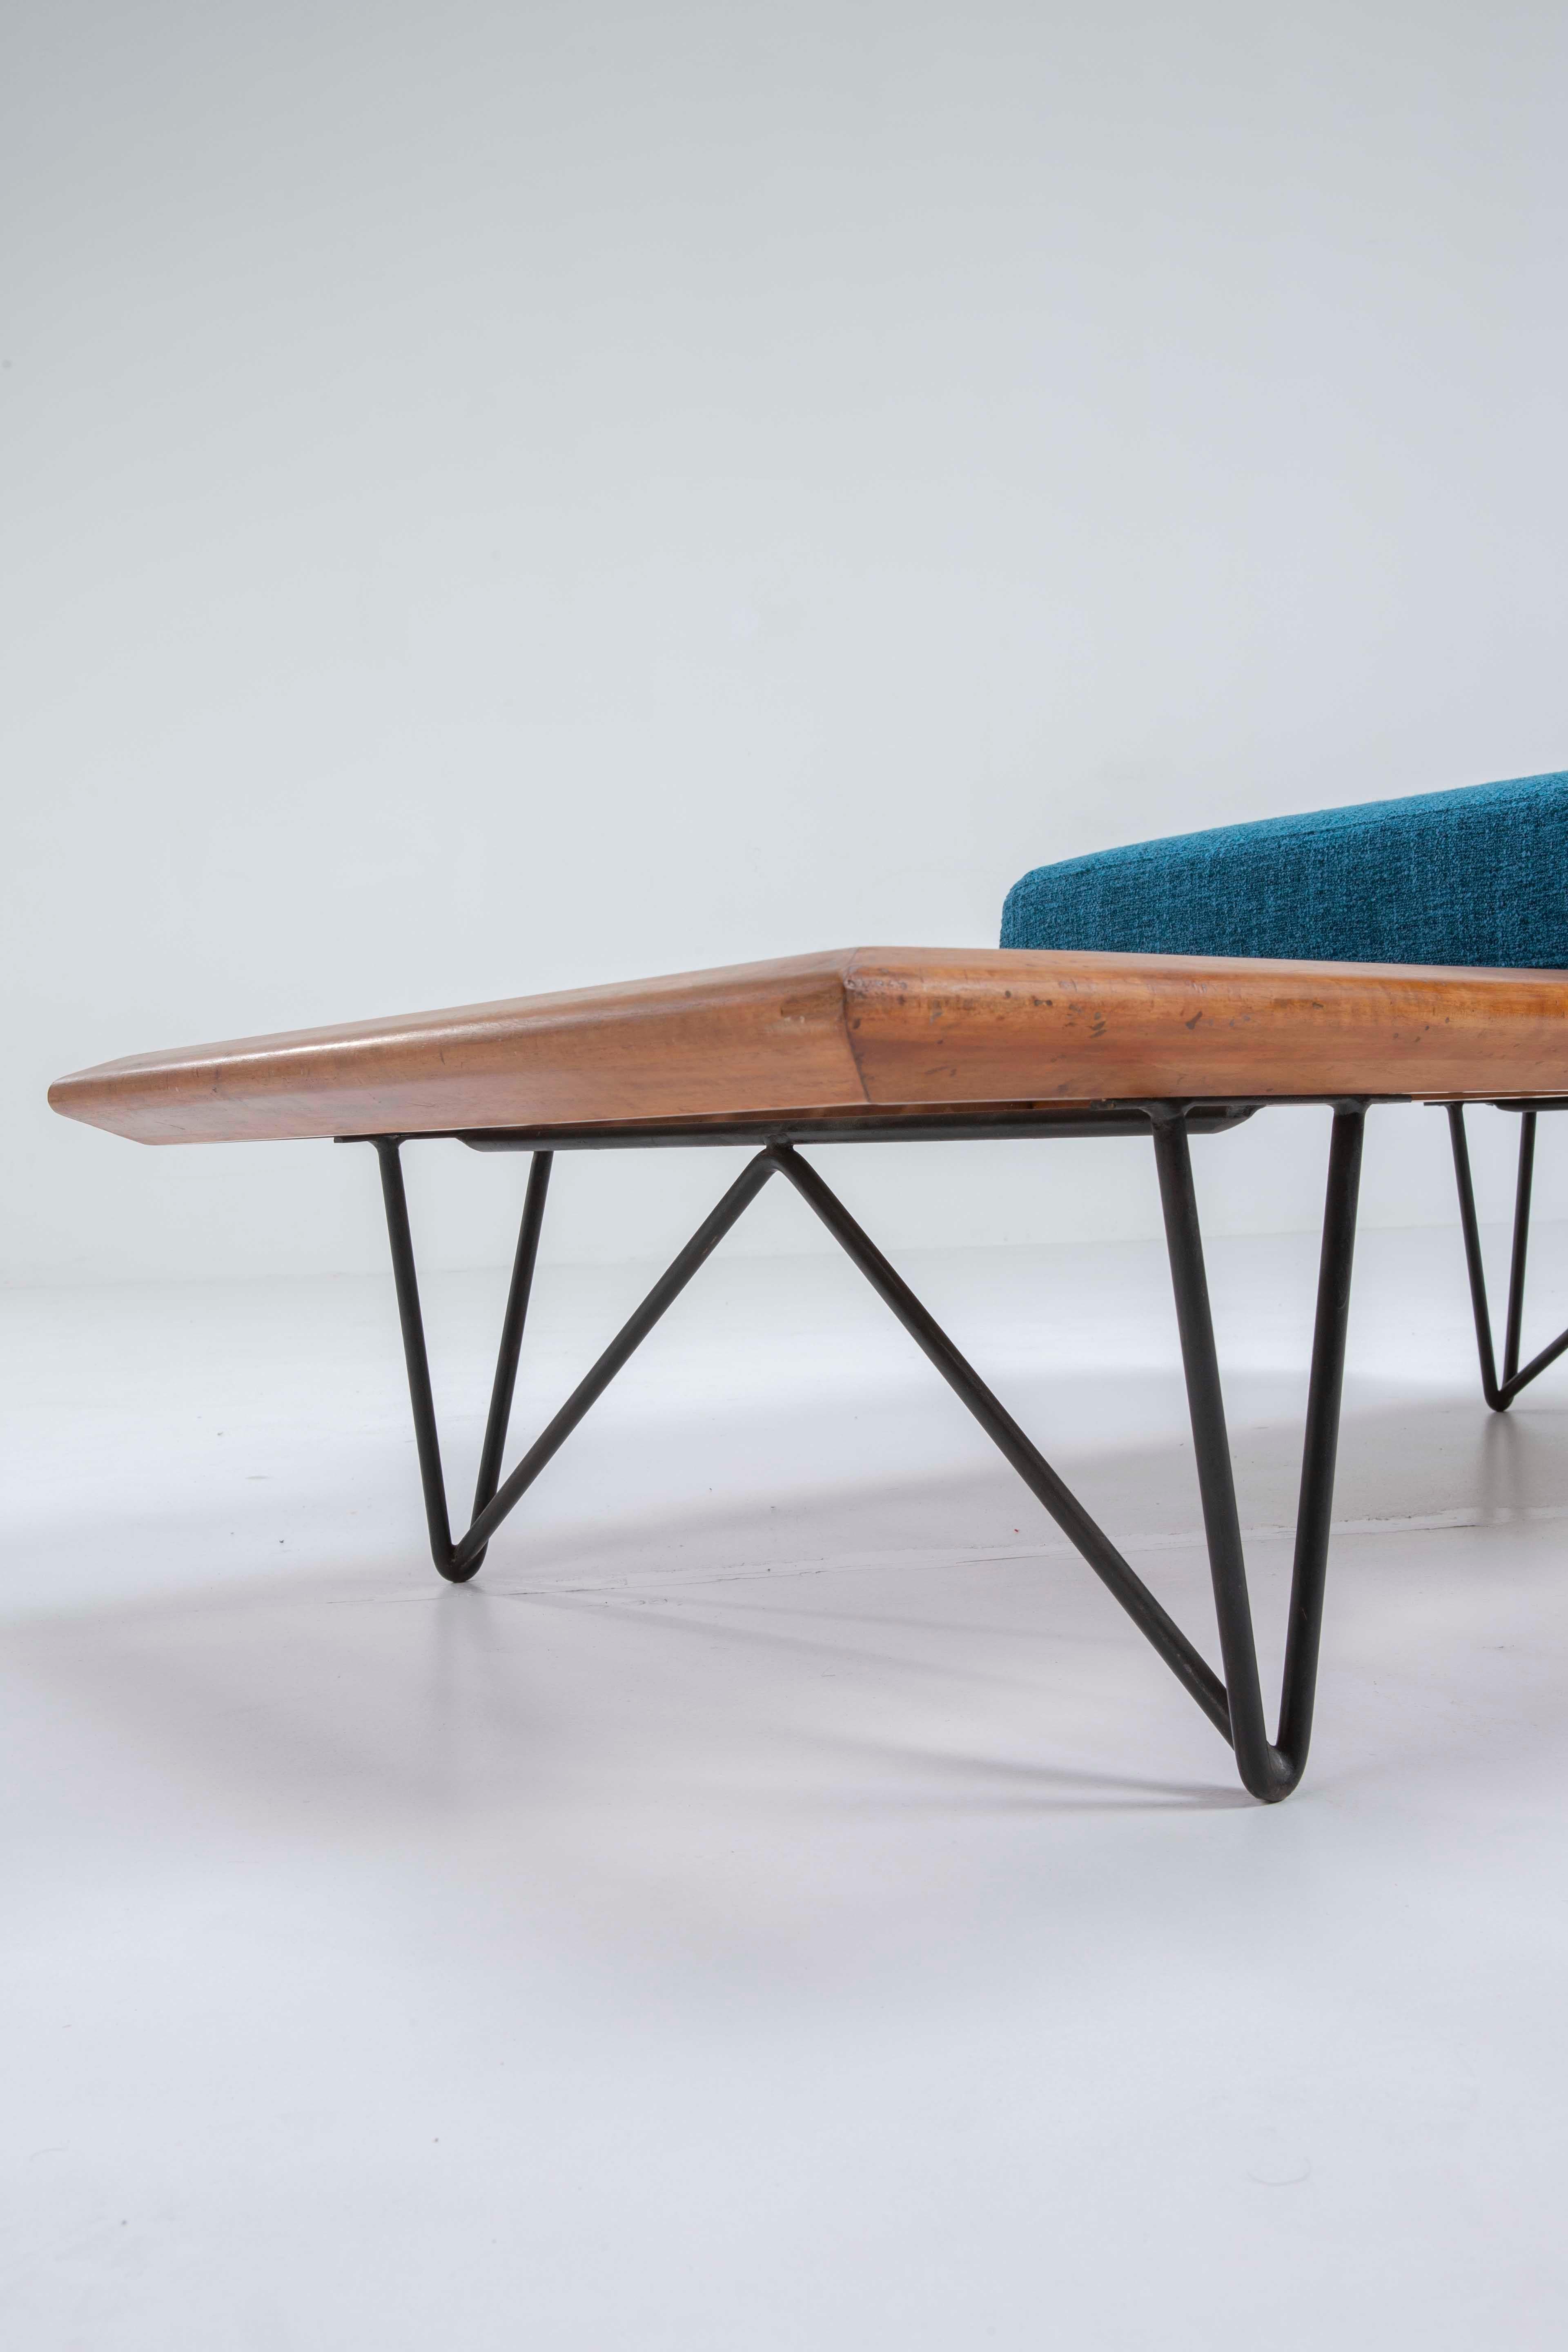 Carlo Hauner and Martin Eisler Rare bench - 1950s Italian Scandinavian Design 2